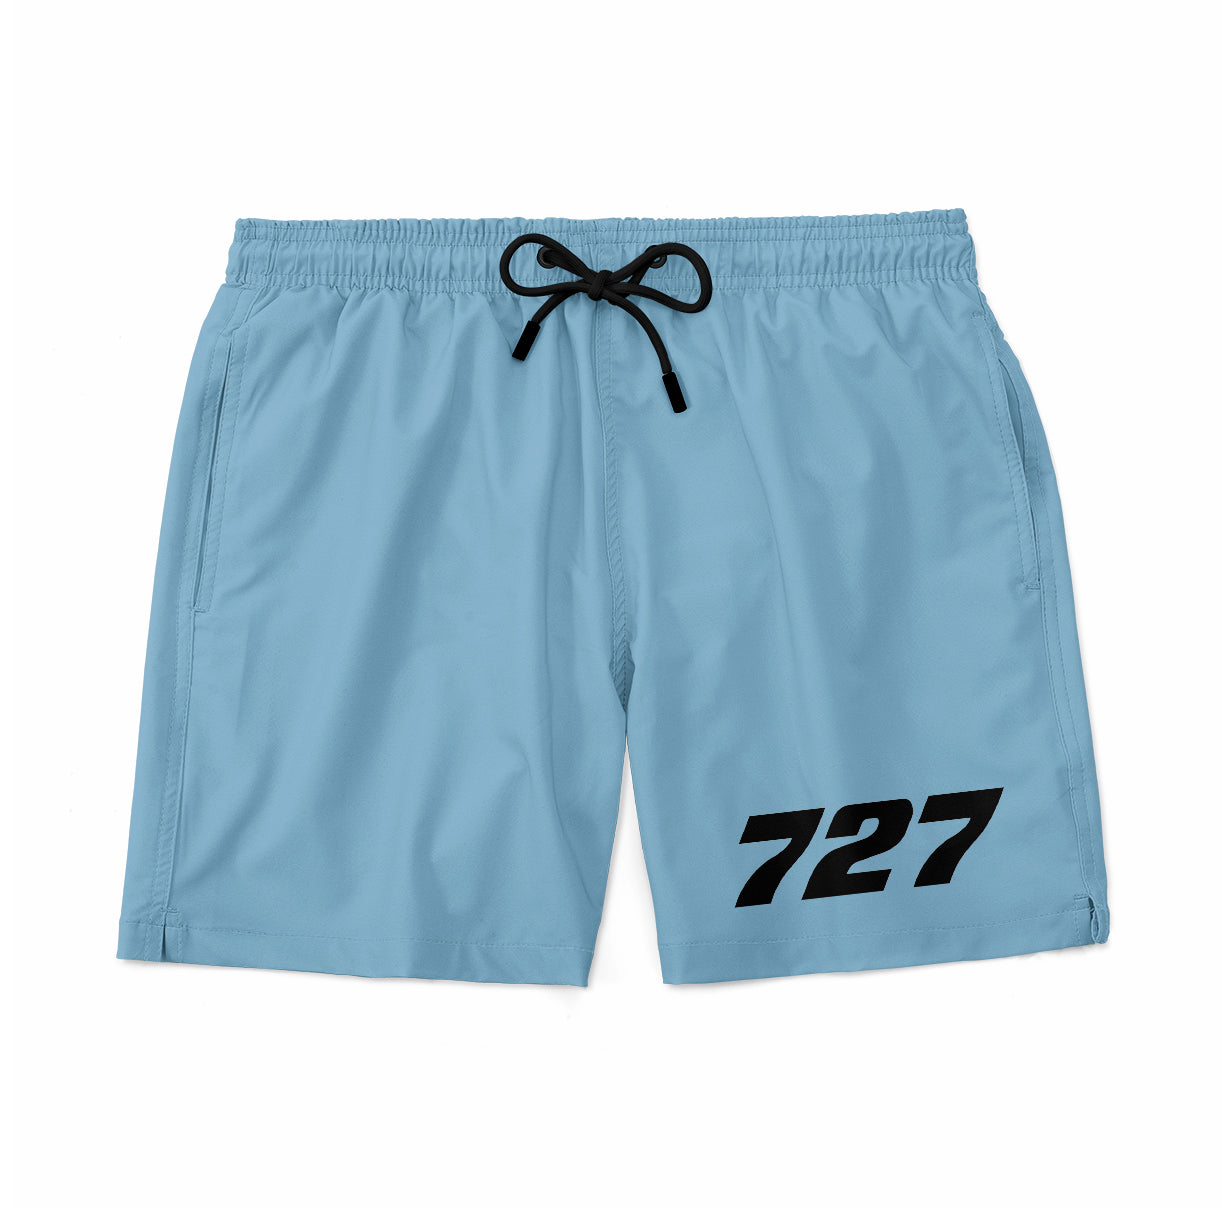 727 Flat Text Designed Swim Trunks & Shorts